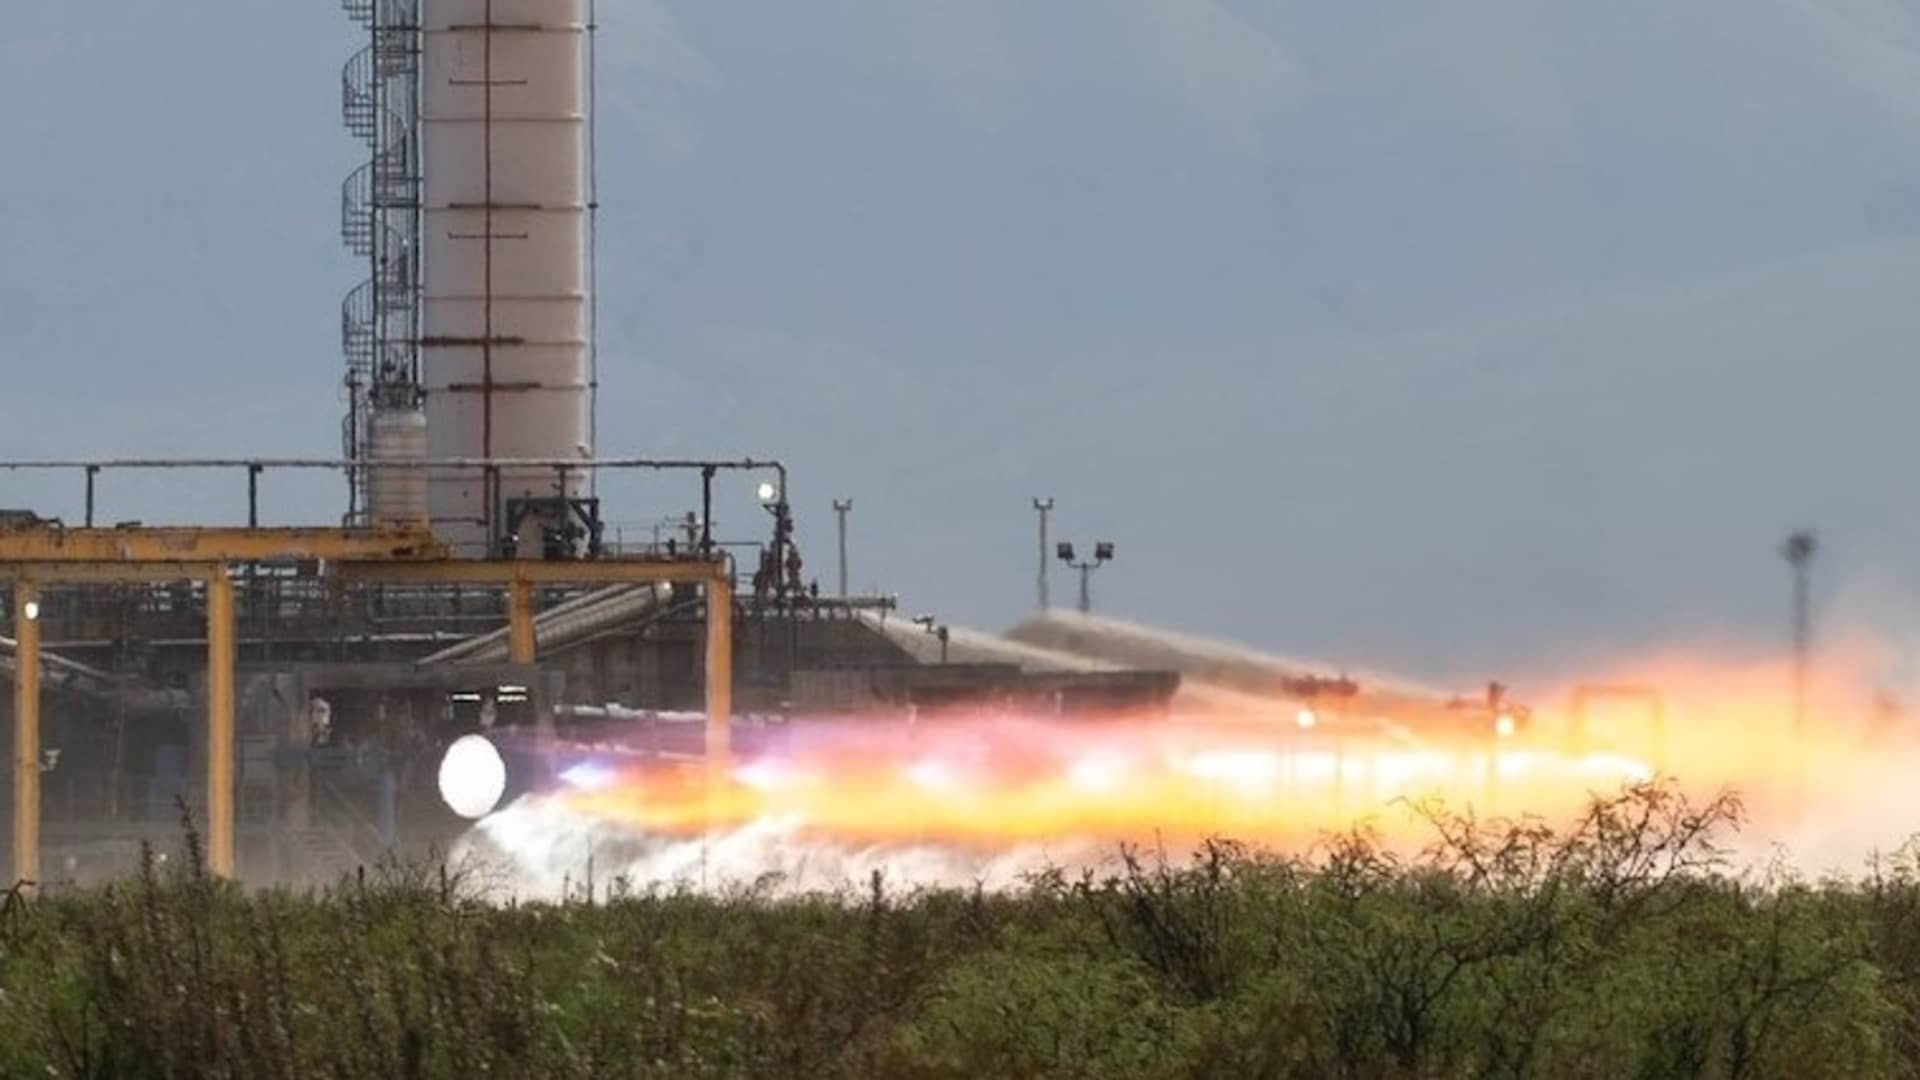 Jeff Bezos’ Blue Origin rocket engine explodes during test in Texas